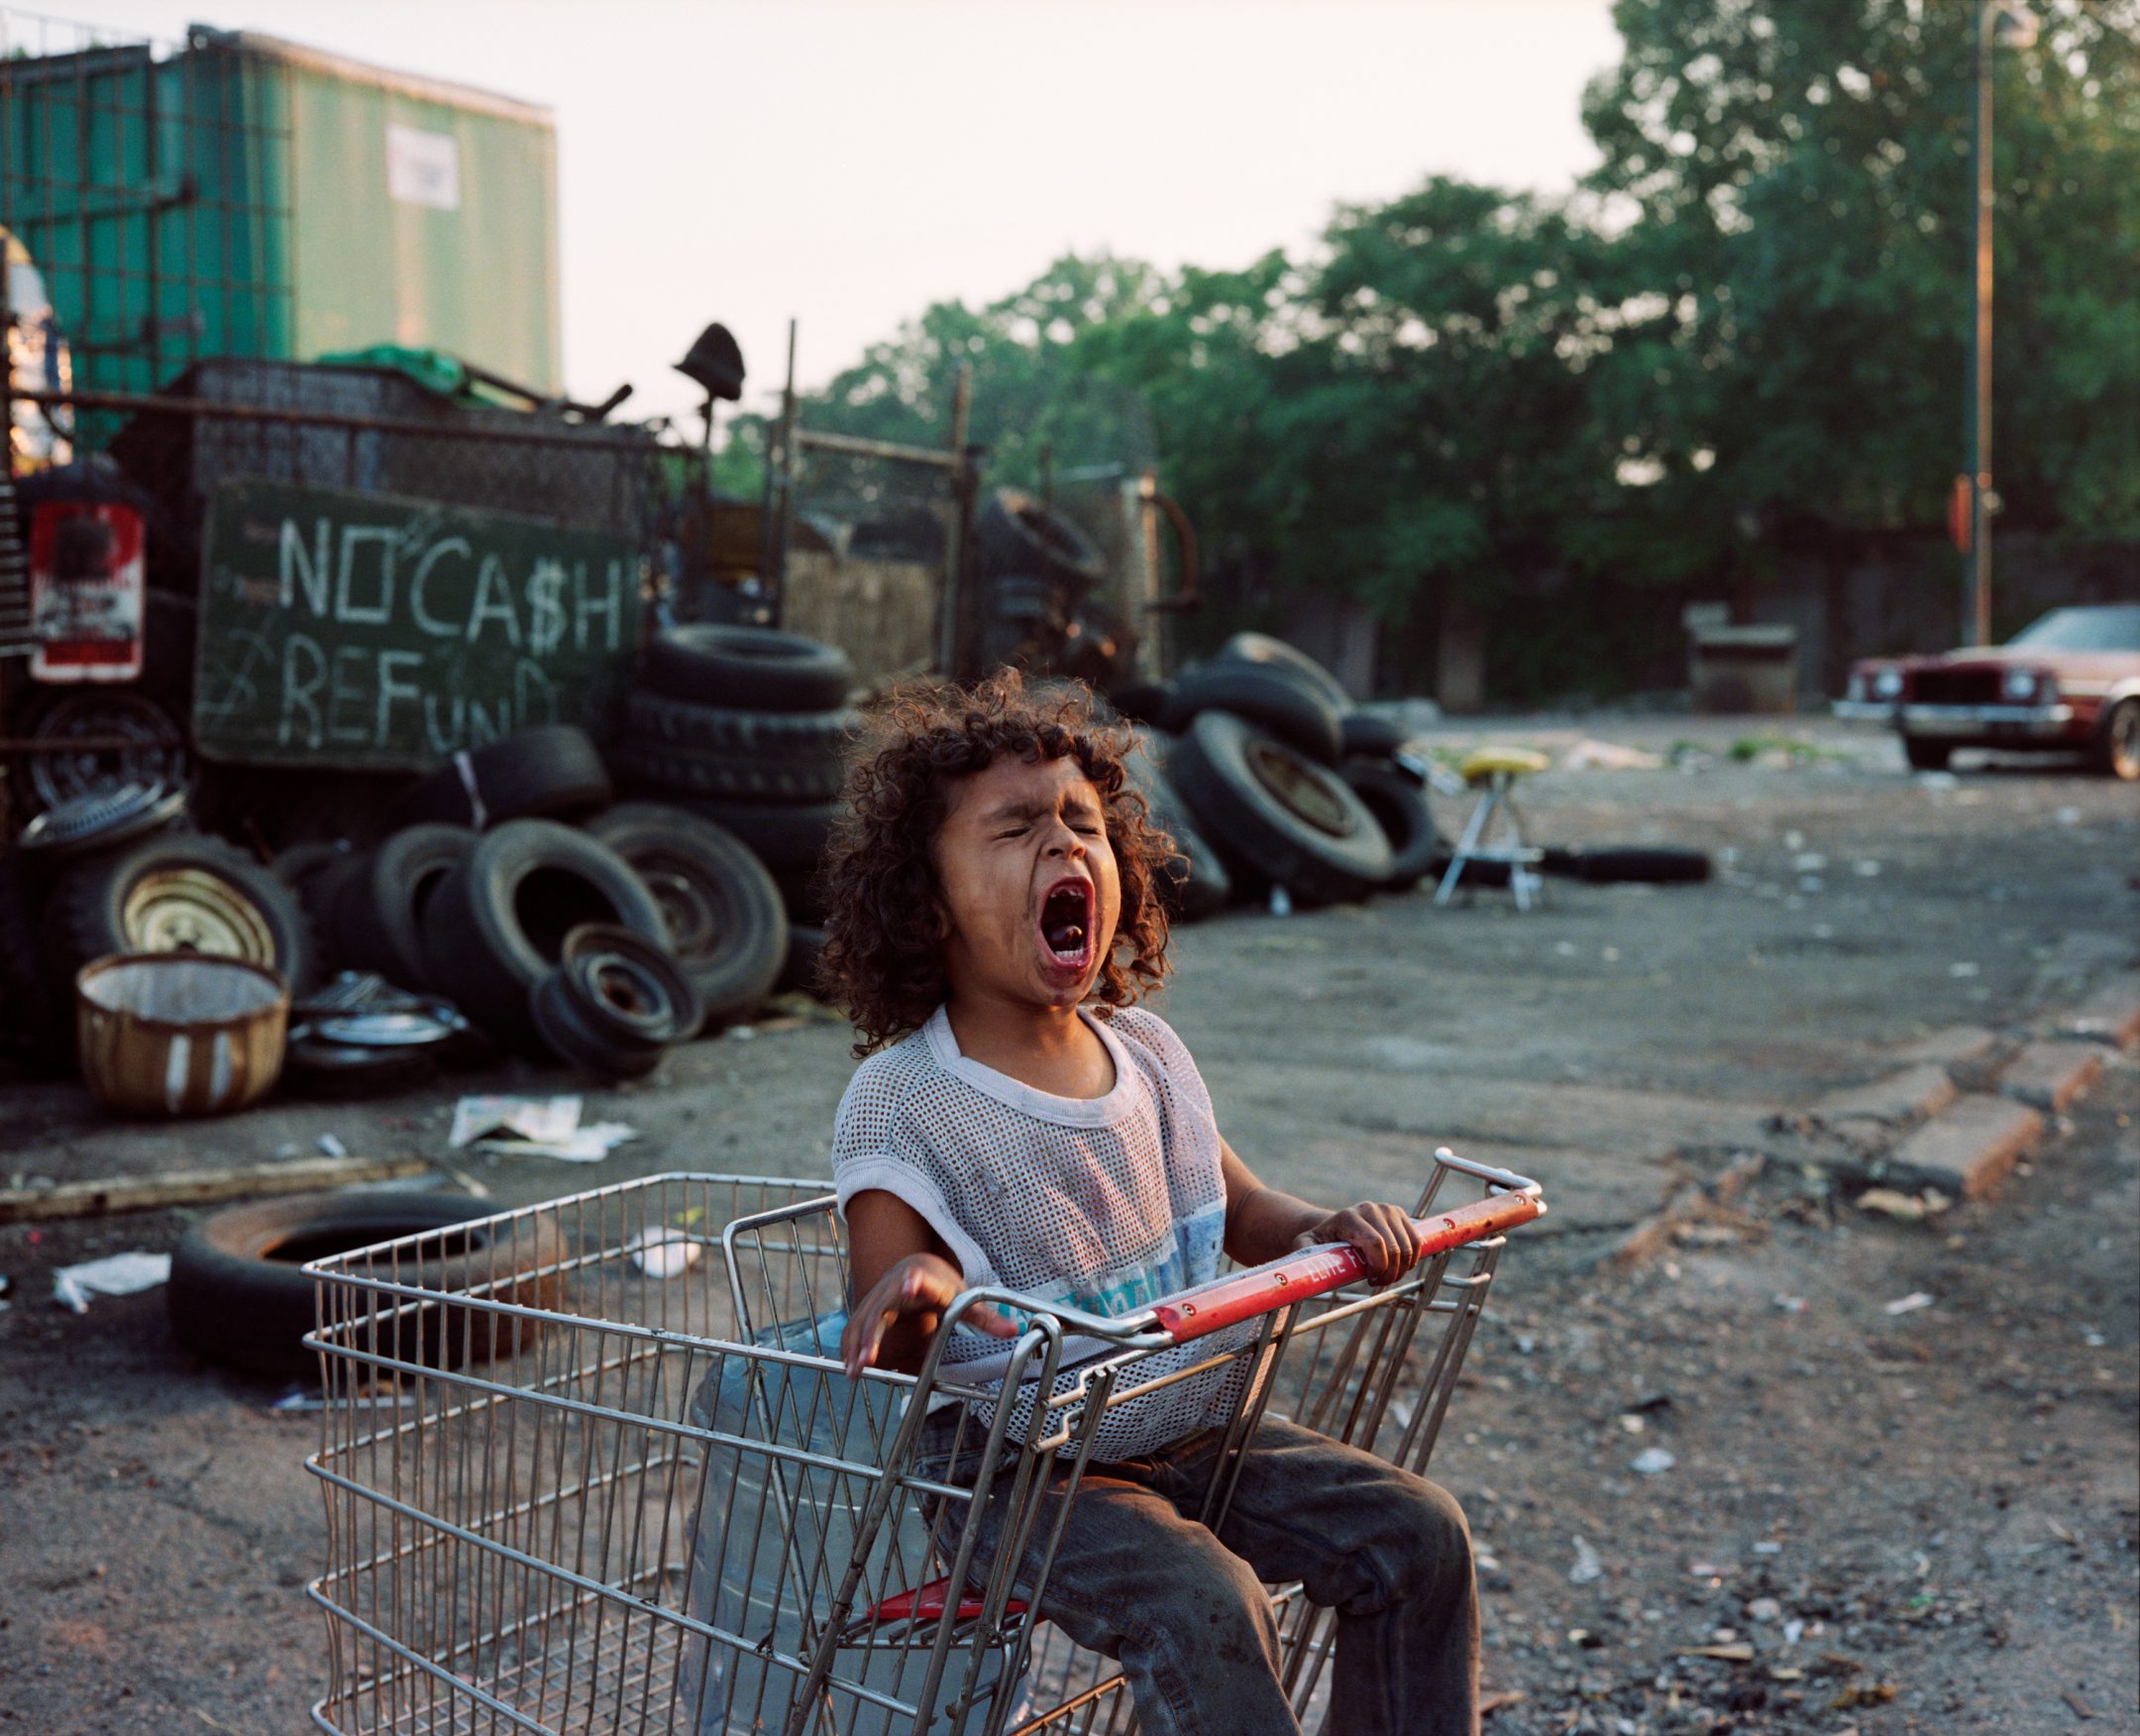 Paul D'Amato - Girl in Shopping Cart, 1989